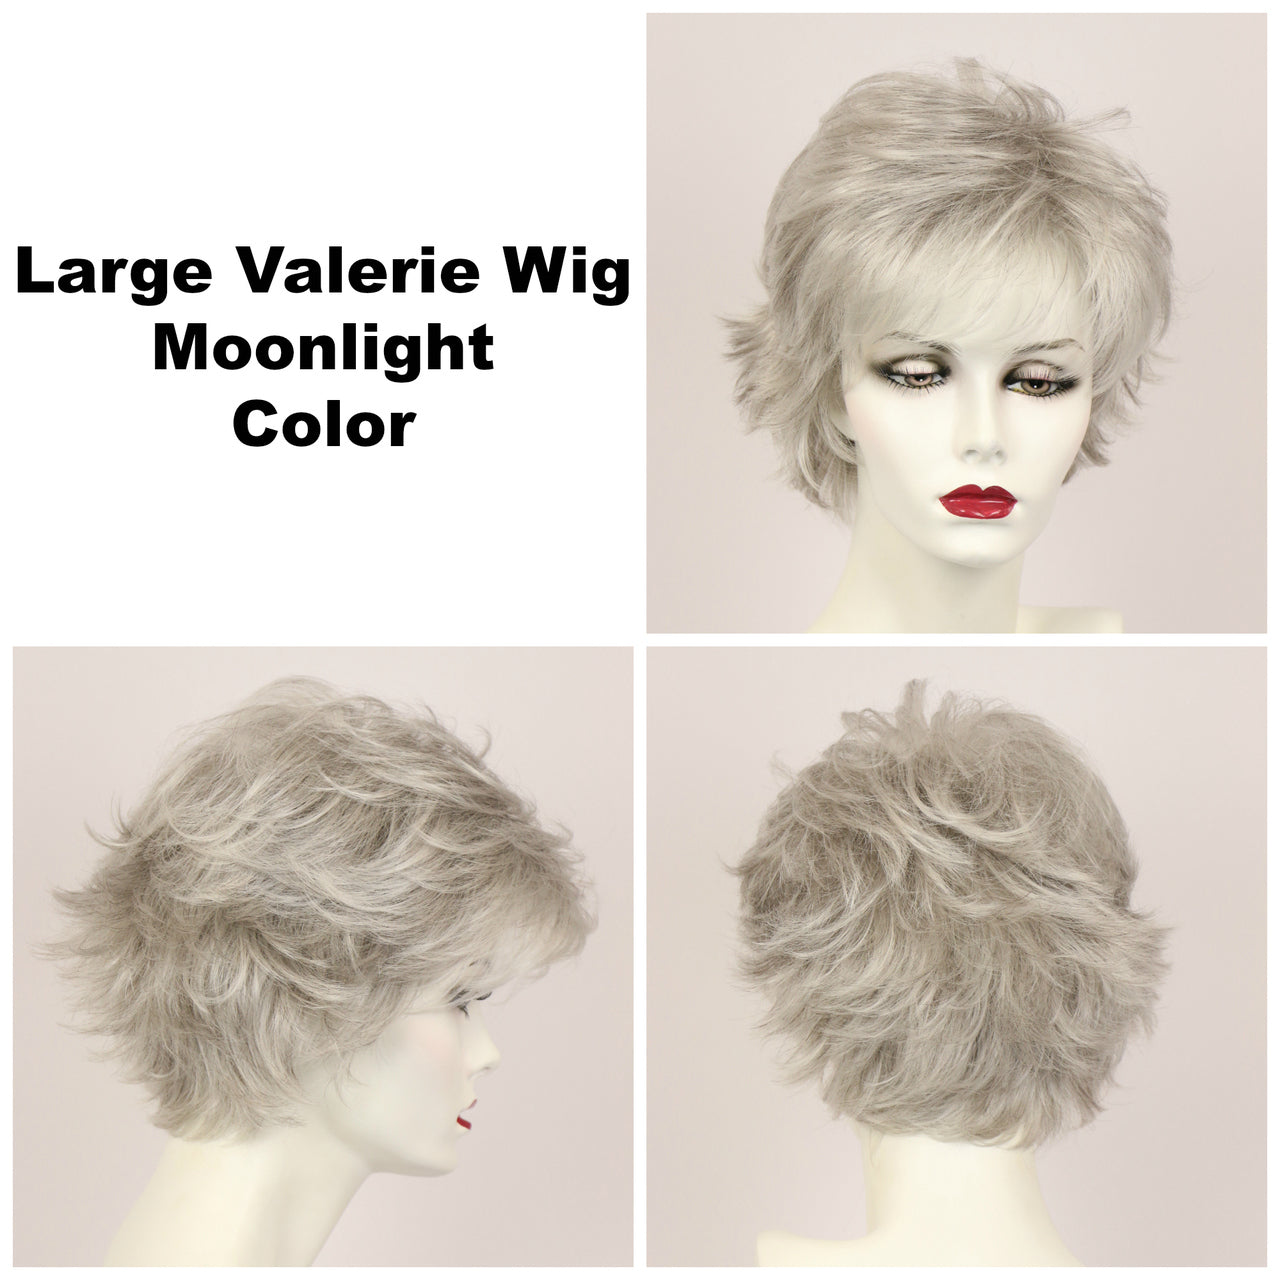 Moonlight / Large Valerie / Medium Wig